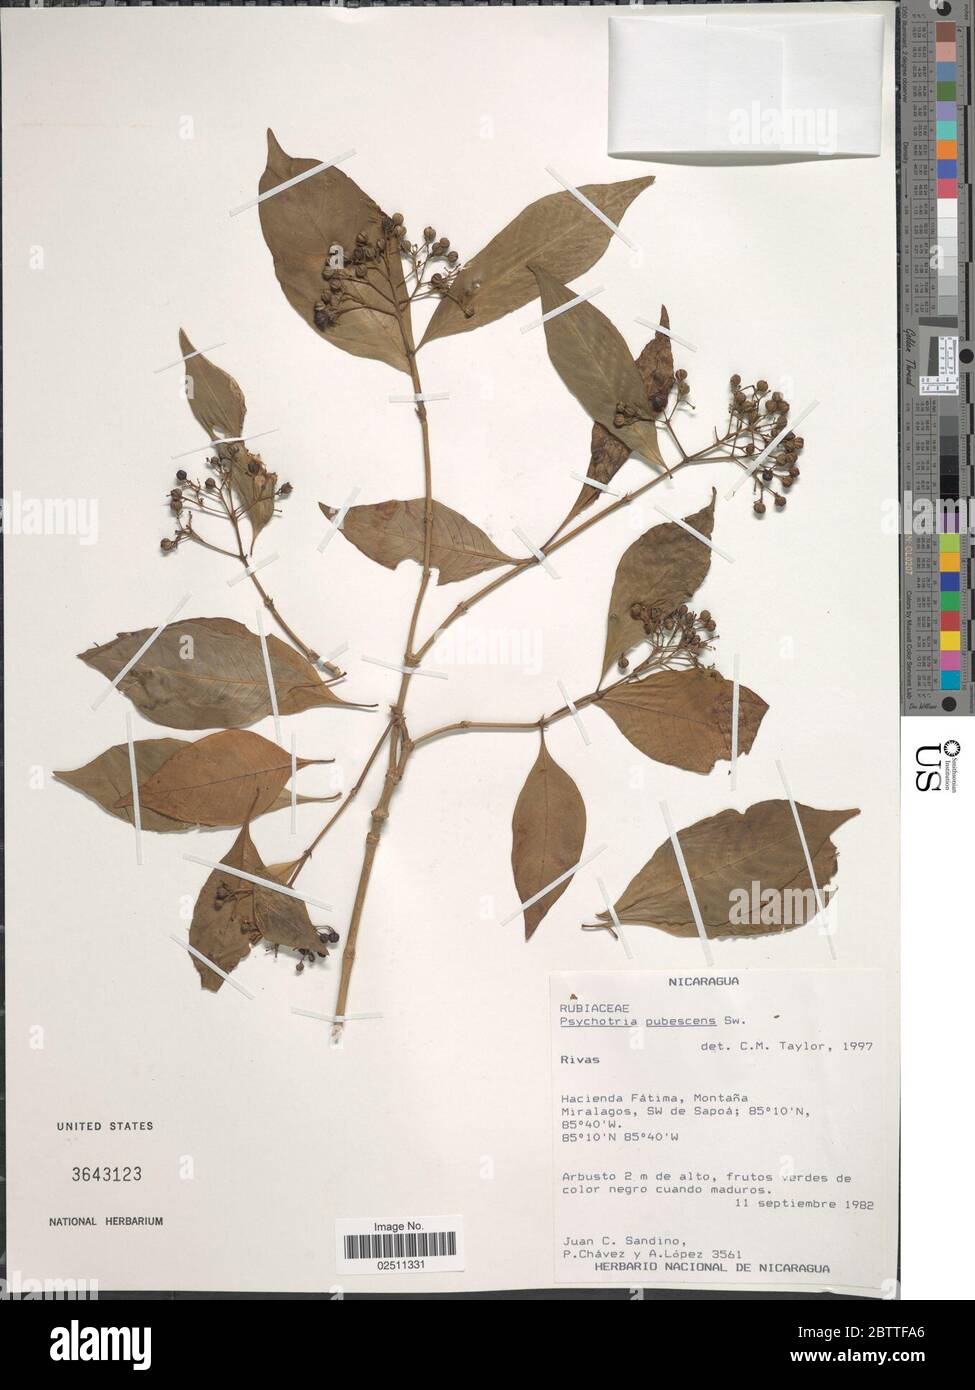 Psychotria pubescens Sw. Stock Photo